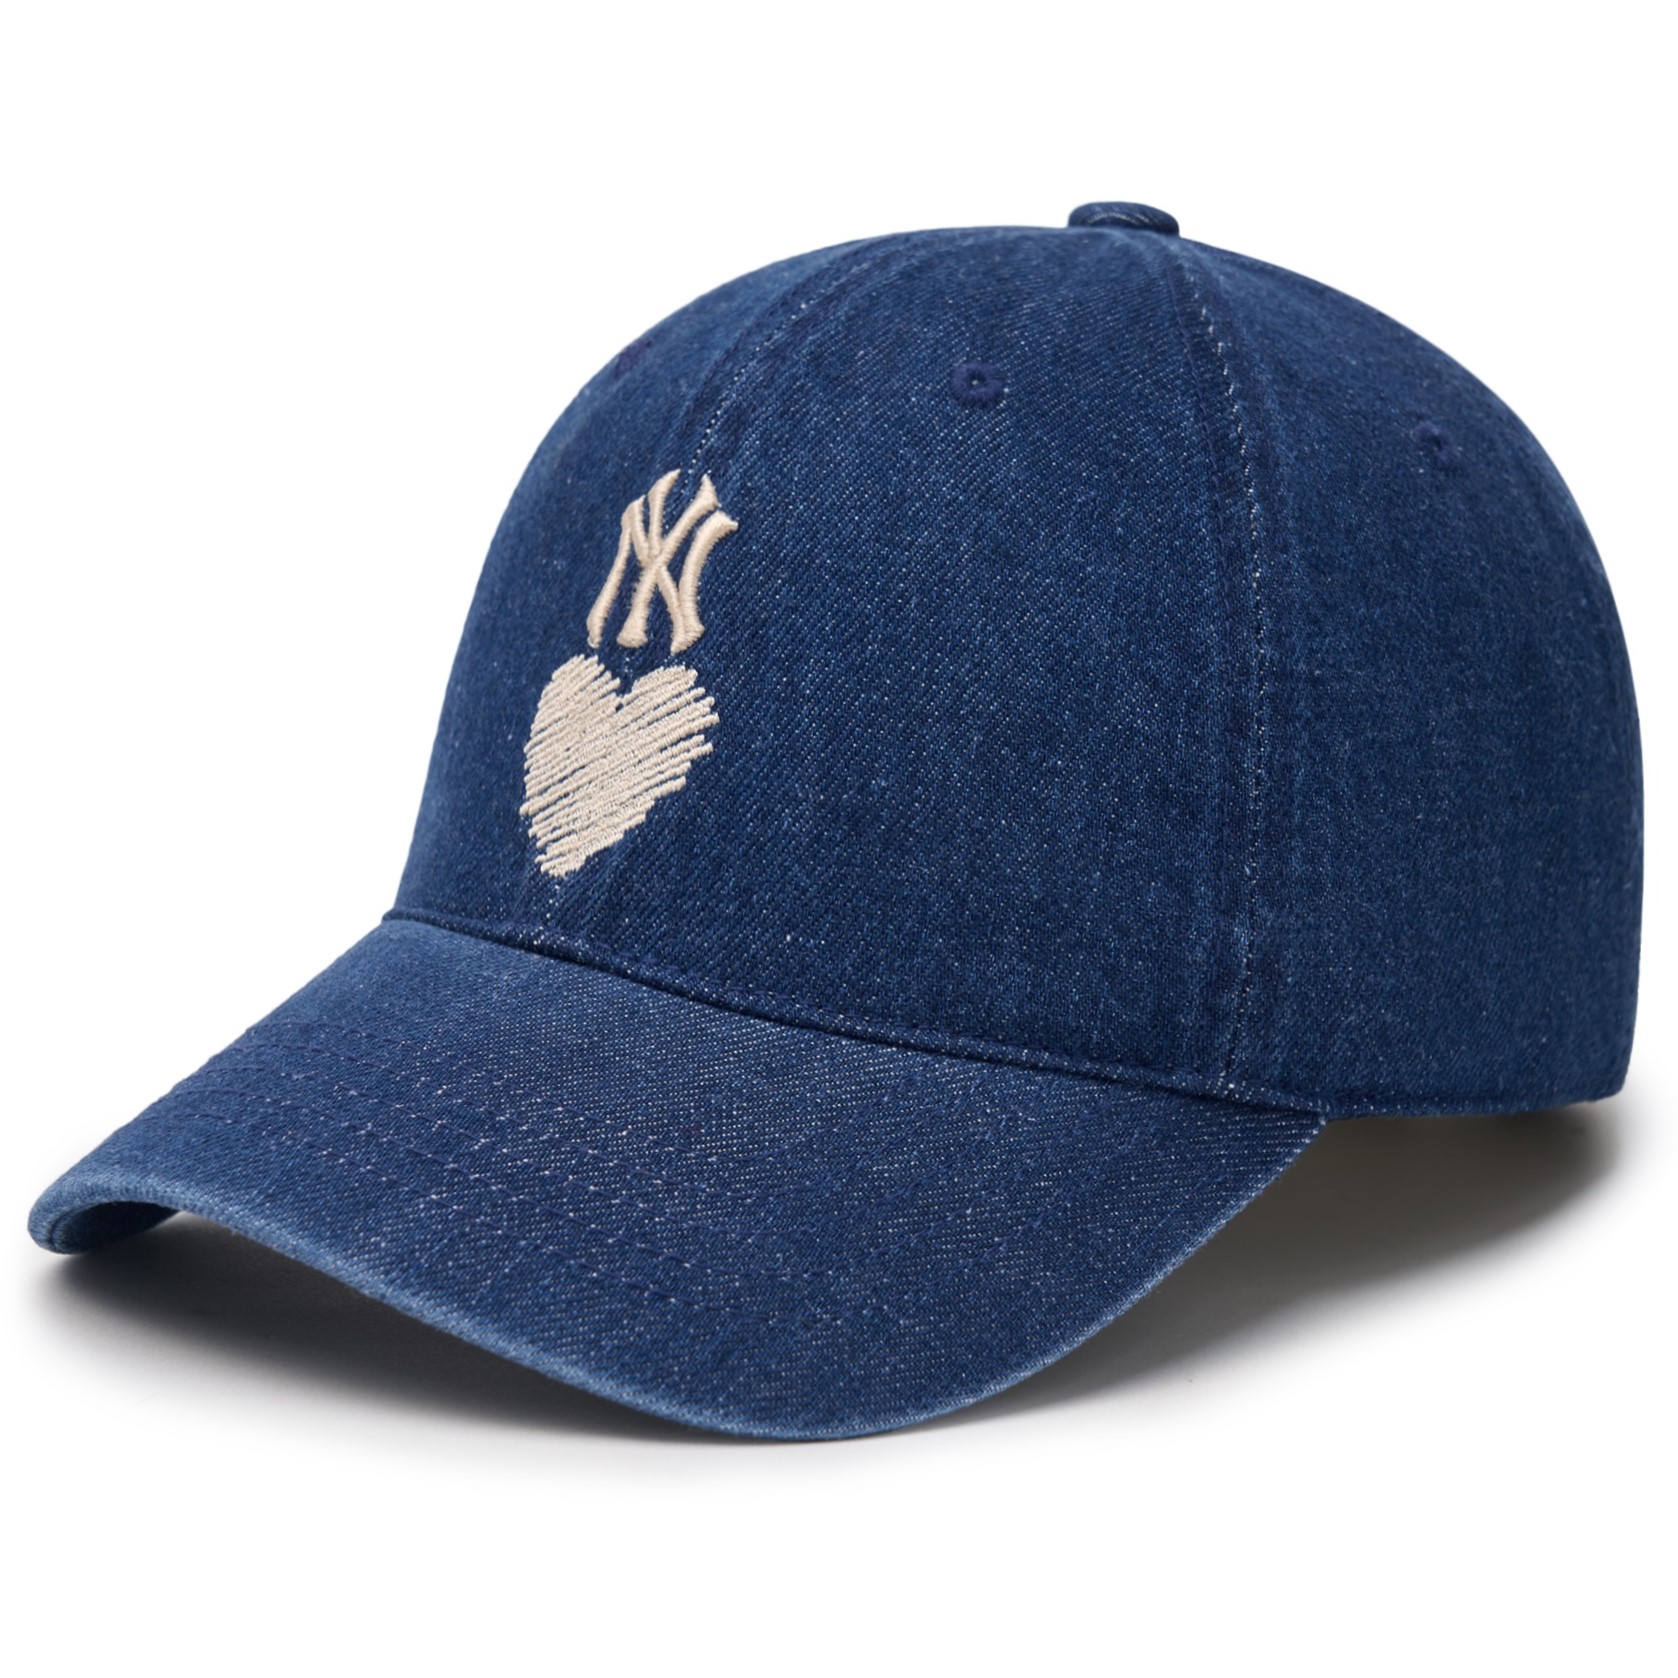 NÓN LƯỠI TRAI MLB NY INDIGO DENIM HEART UNSTRUCTURED BALL CAP NEW YORK YANKEES 3ACPH024N-50IN 4